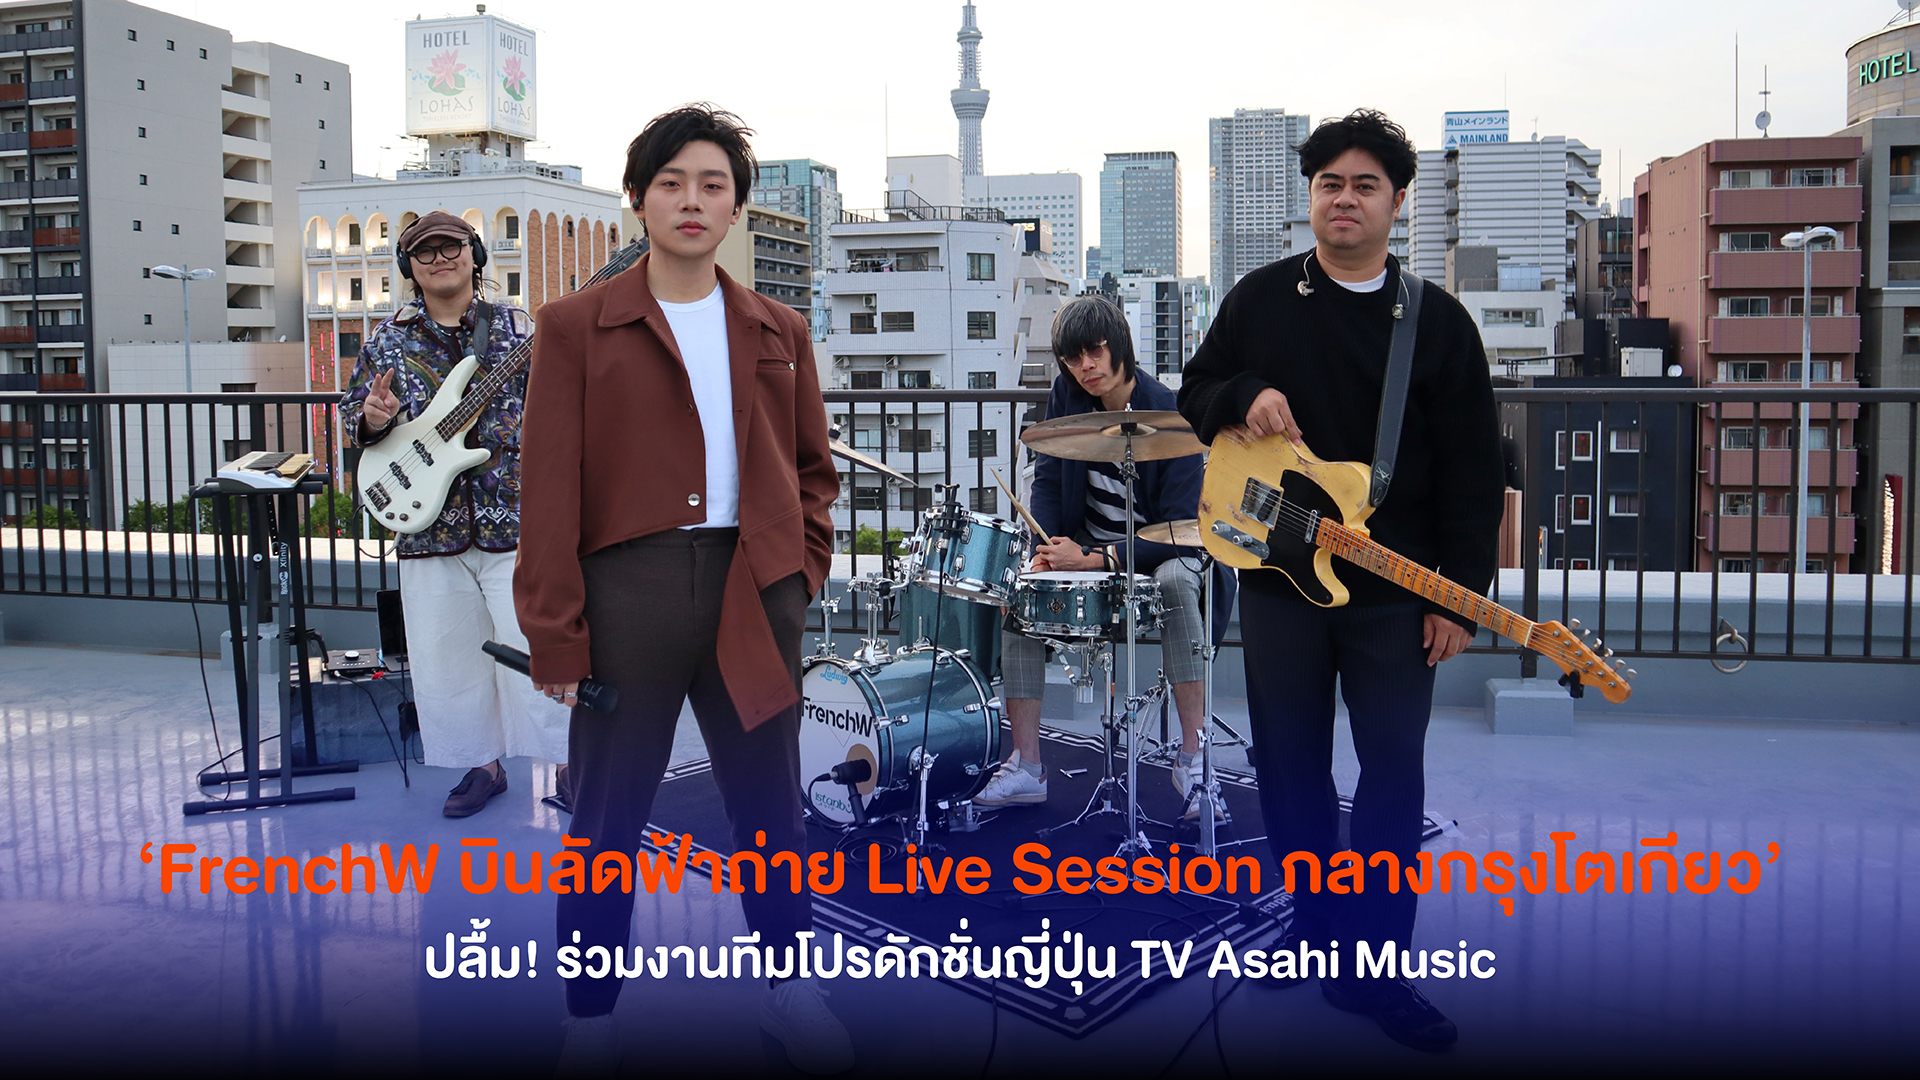 FrenchW (เฟรนซ์-ดั๊บ) จากค่าย Tero Music บินลัดฟ้าถ่าย Live Session กลางกรุงโตเกียว ปลื้ม! ร่วมงานทีมโปรดักชั่นญี่ปุ่น TV Asahi Music